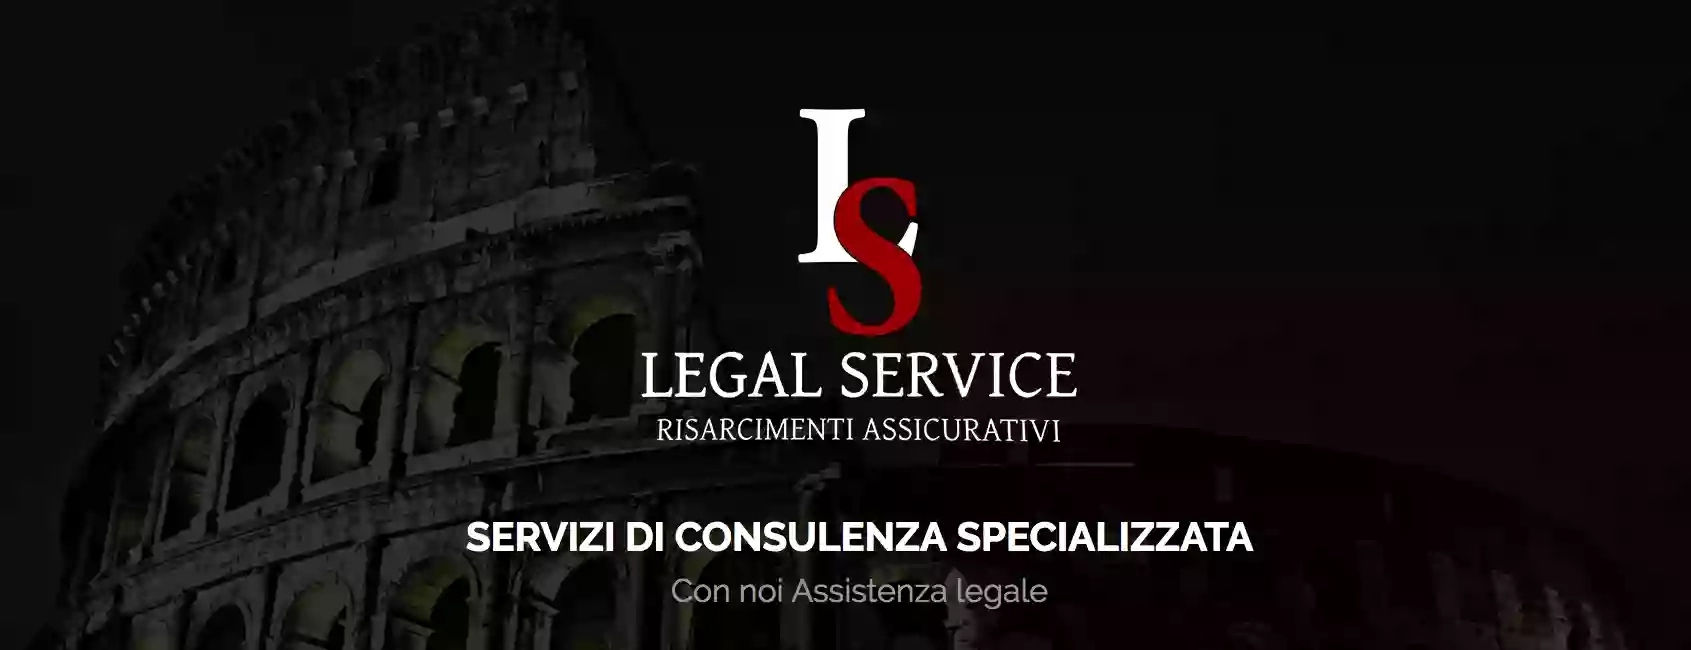 STUDIO LEGAL SERVICE Srl